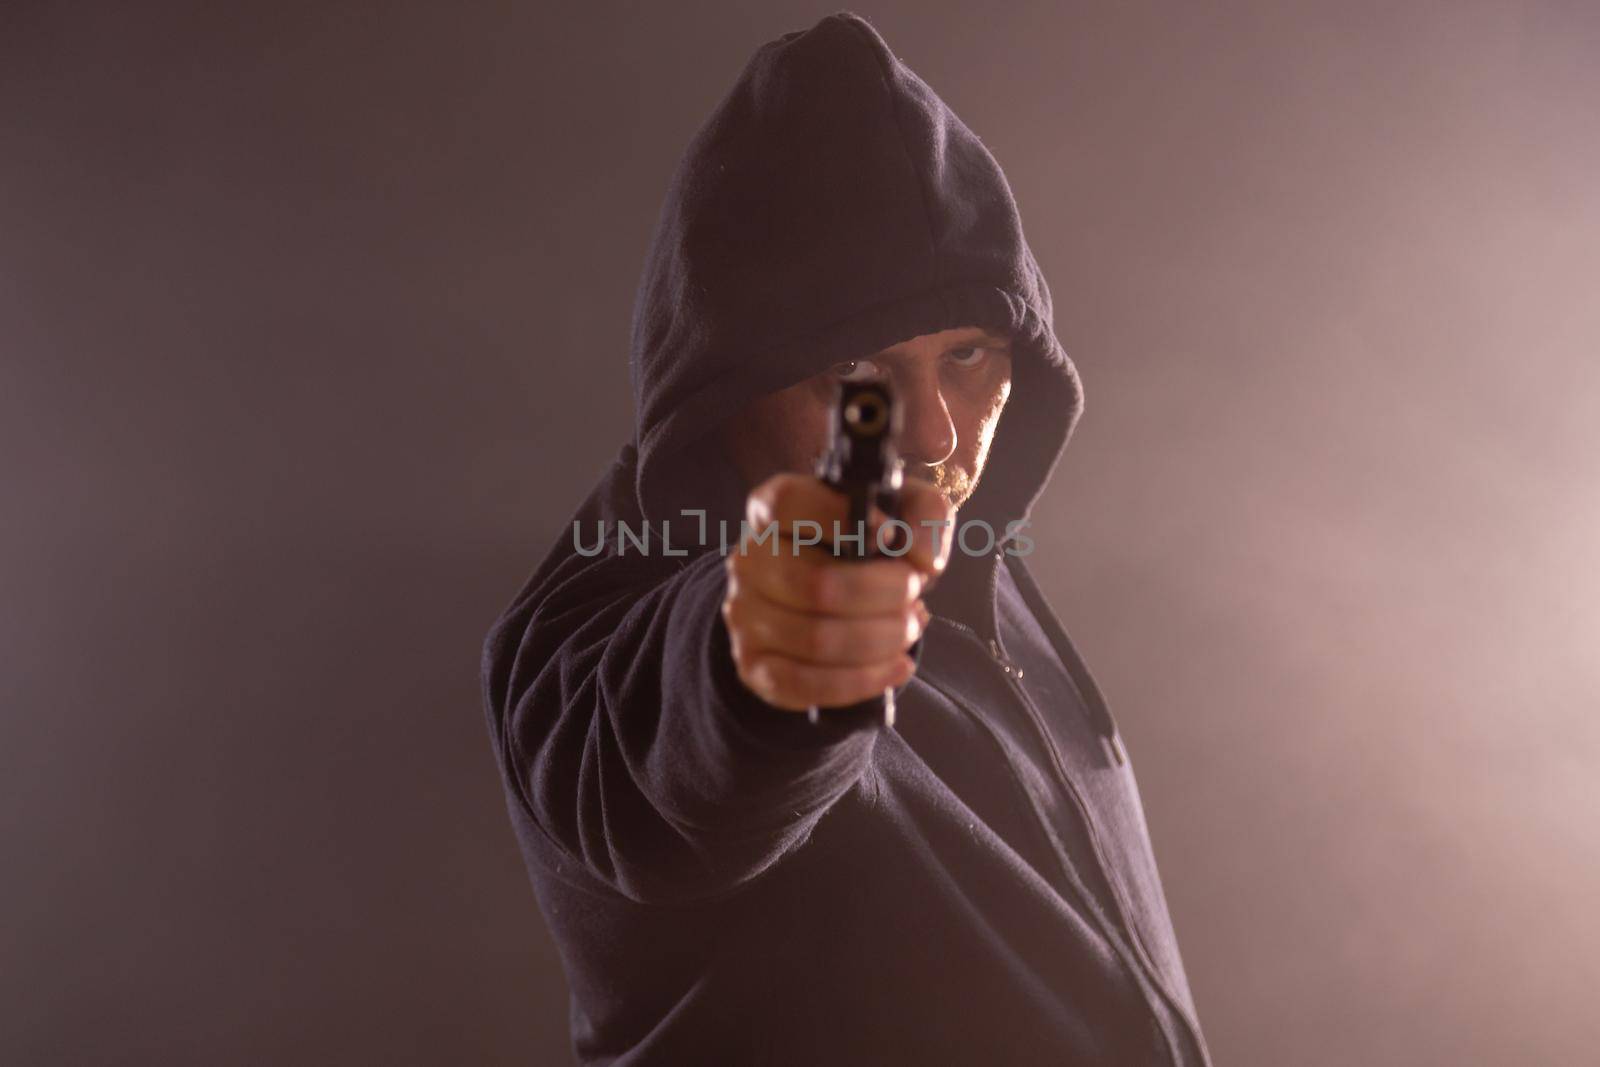 Man in black hoodie points handgun in smoke